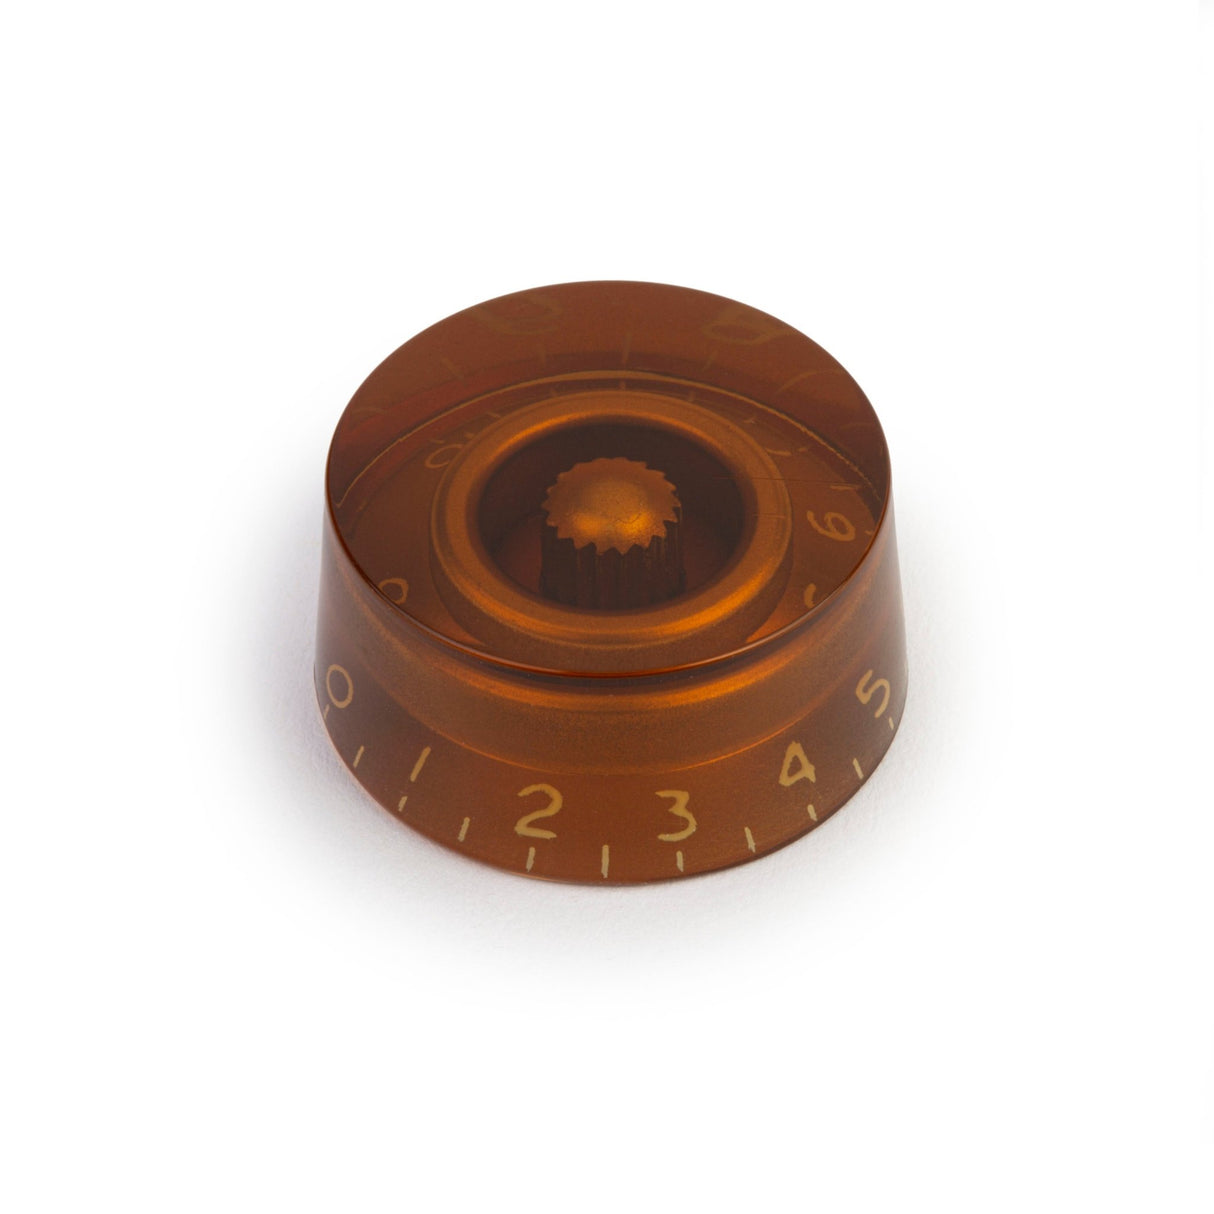 Potentiometer Speed Knobs x 2 (Amber) - Parts - WM Guitars